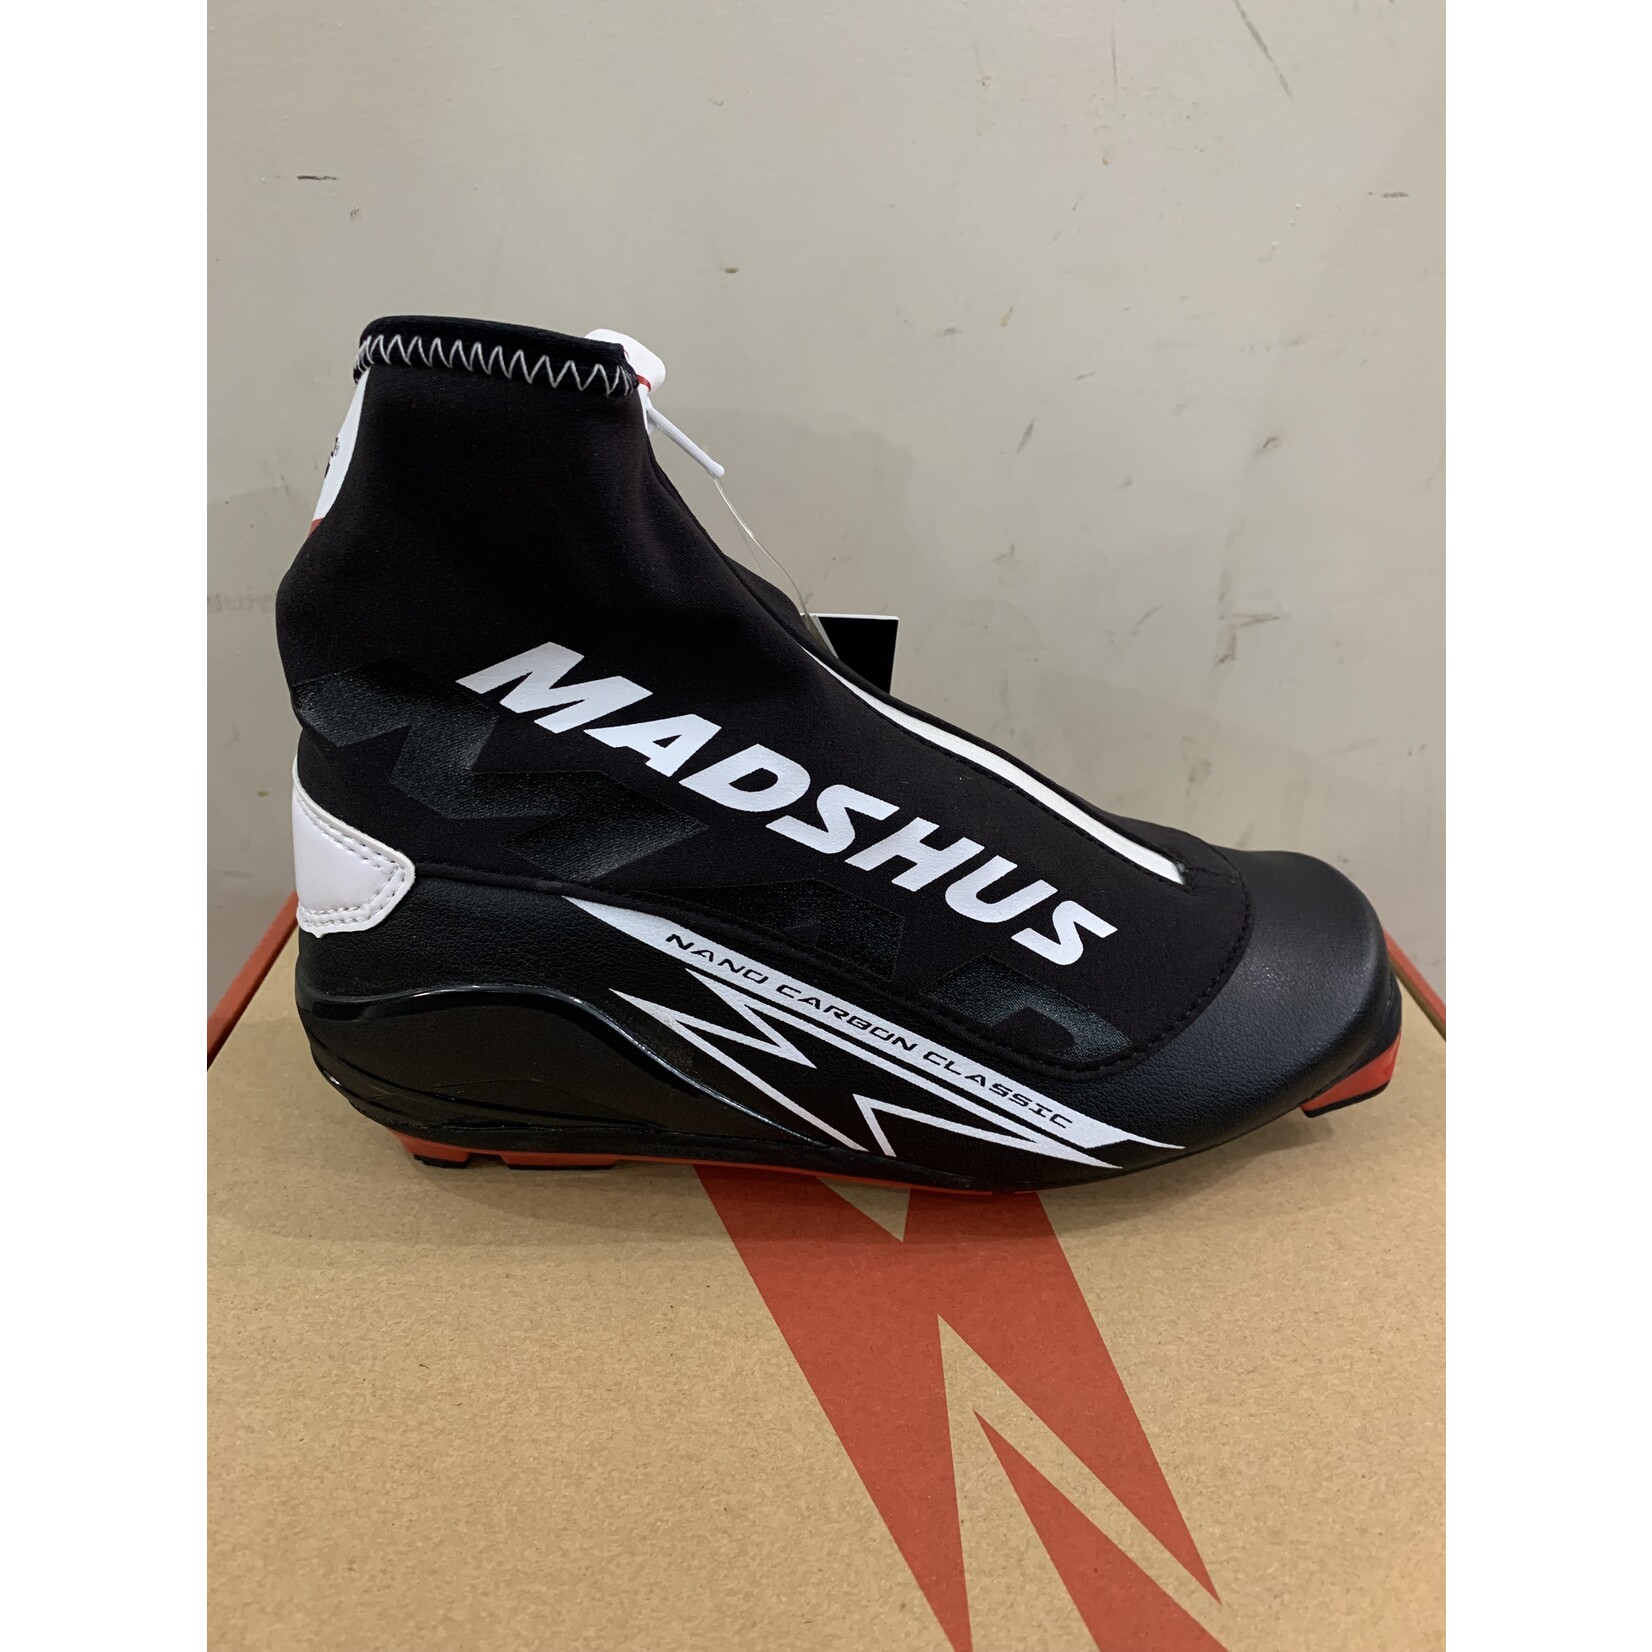 Madshus nano carbon classic boot - Fitness Fanatics